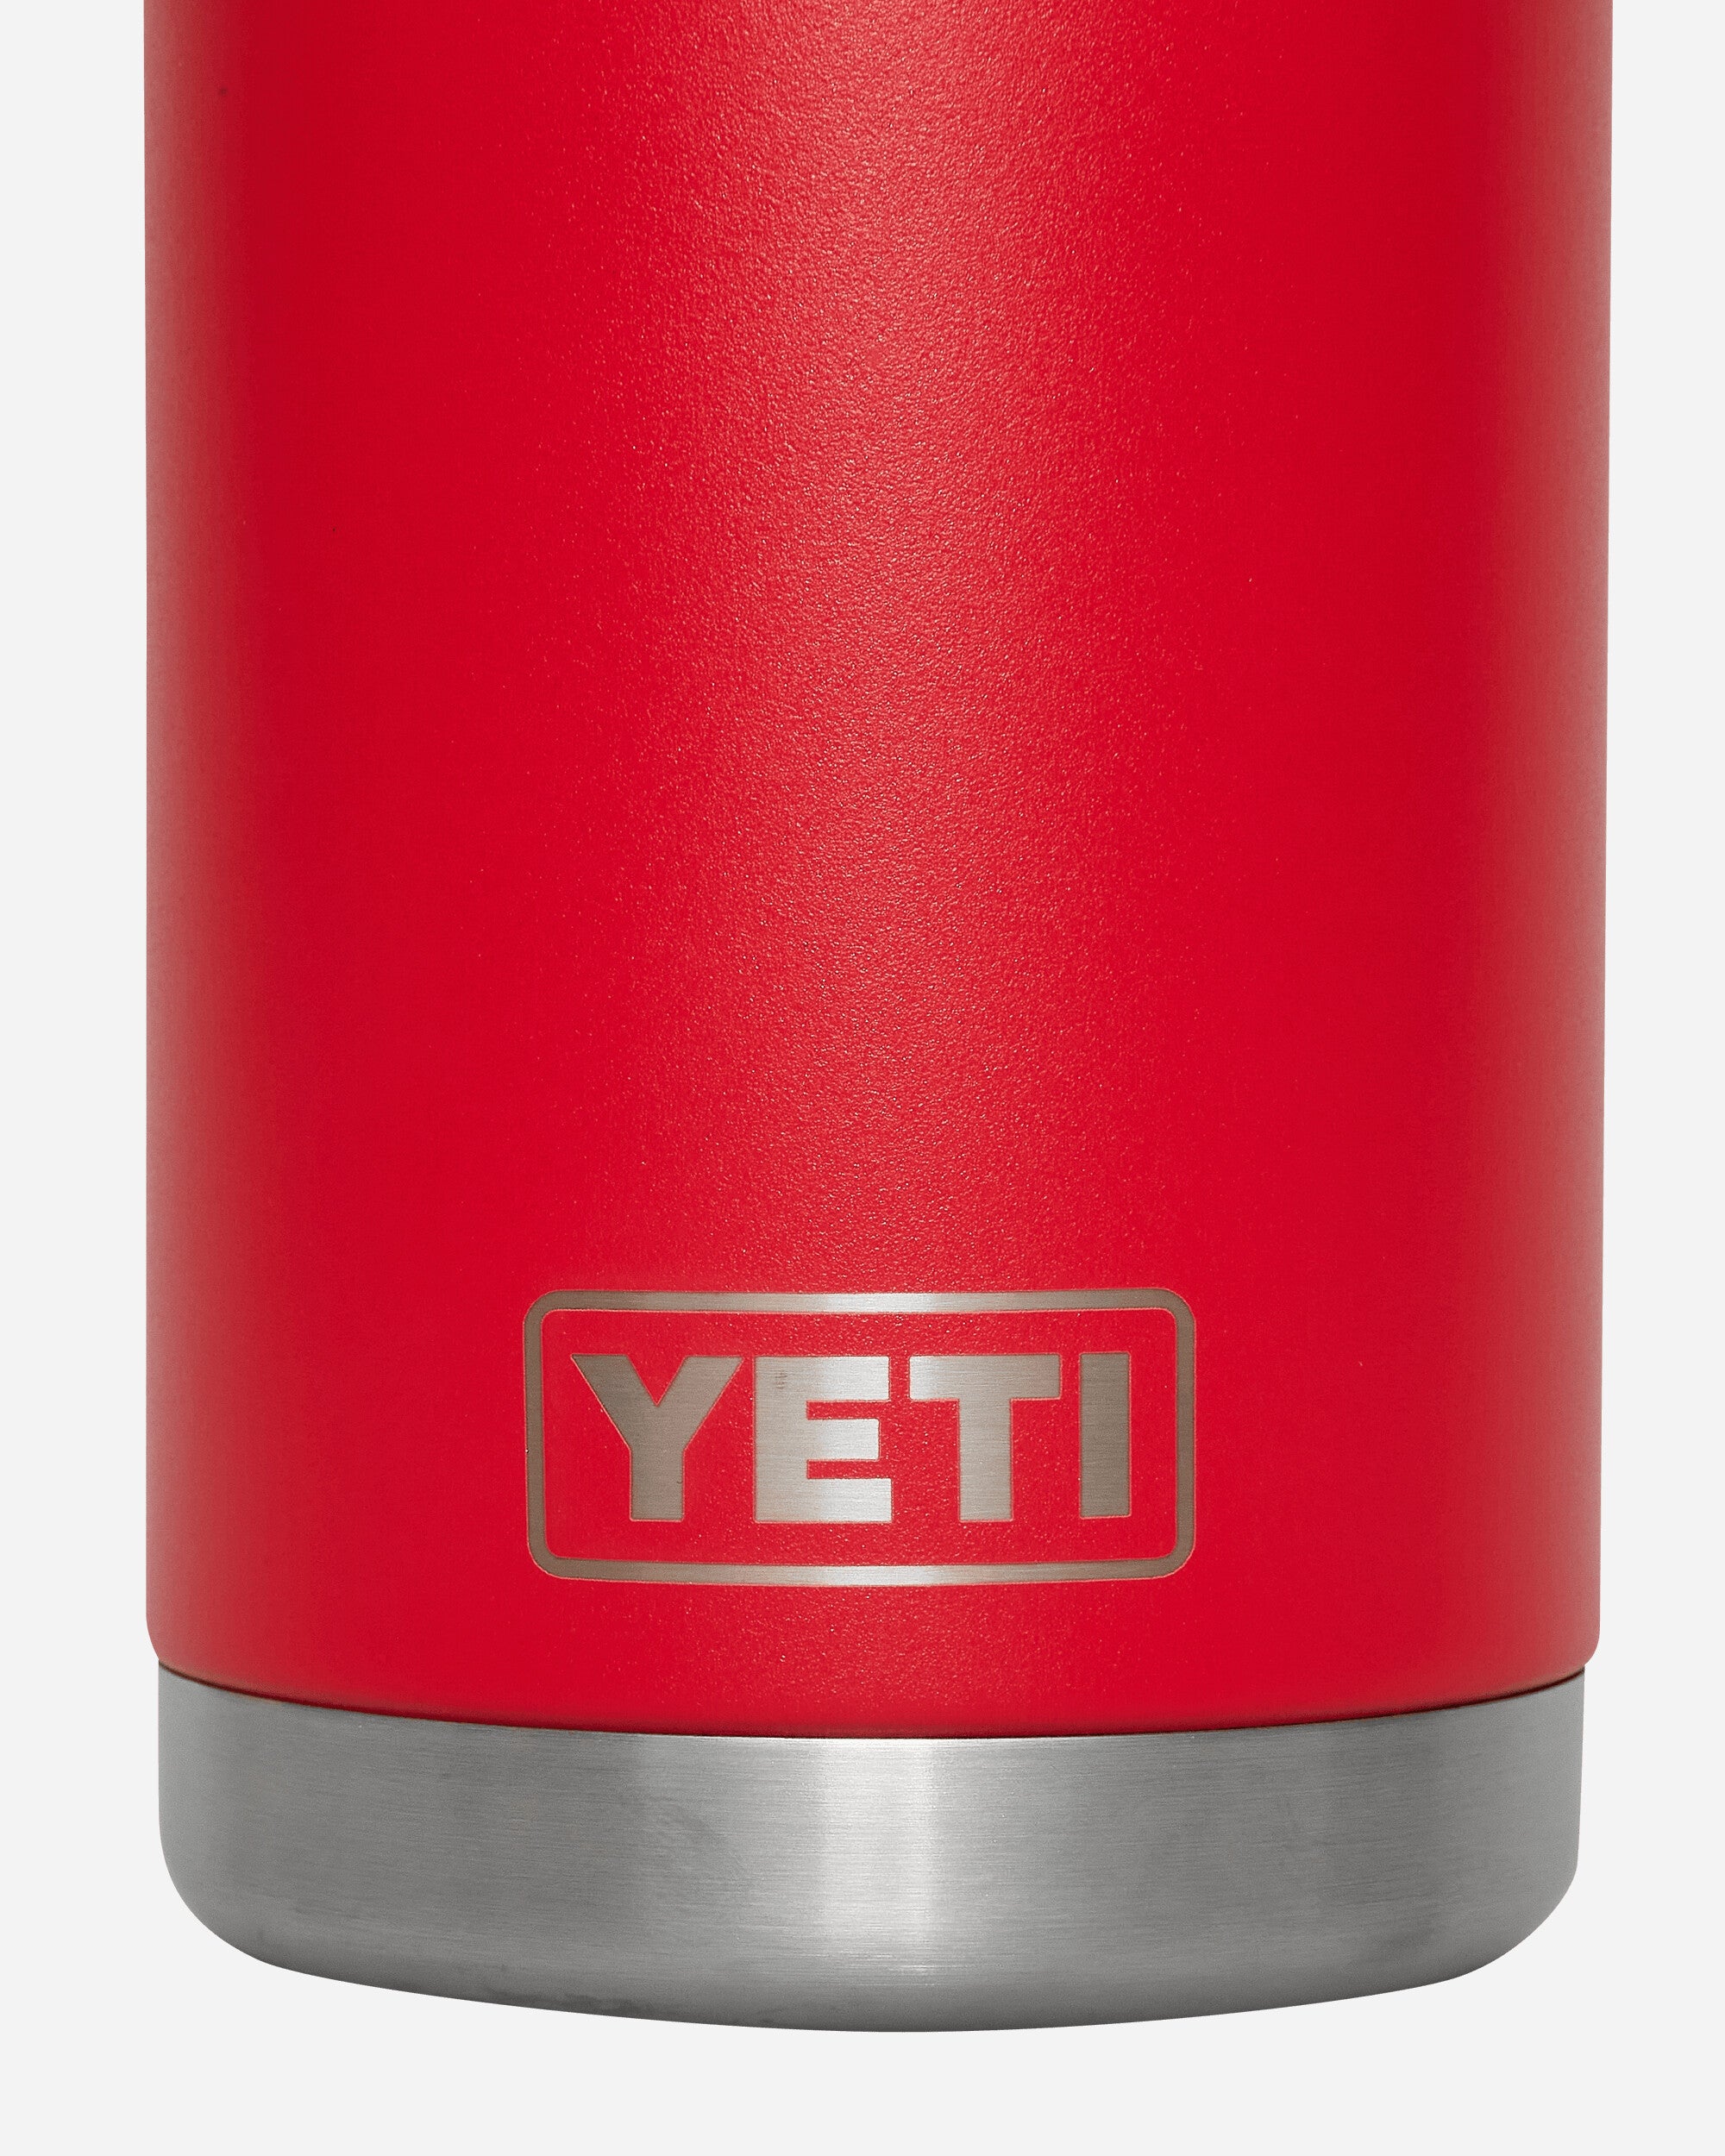 YETI Rambler 26 Oz Bottle Chug Rescue Red Equipment Bottles and Bowls 0310 SPR